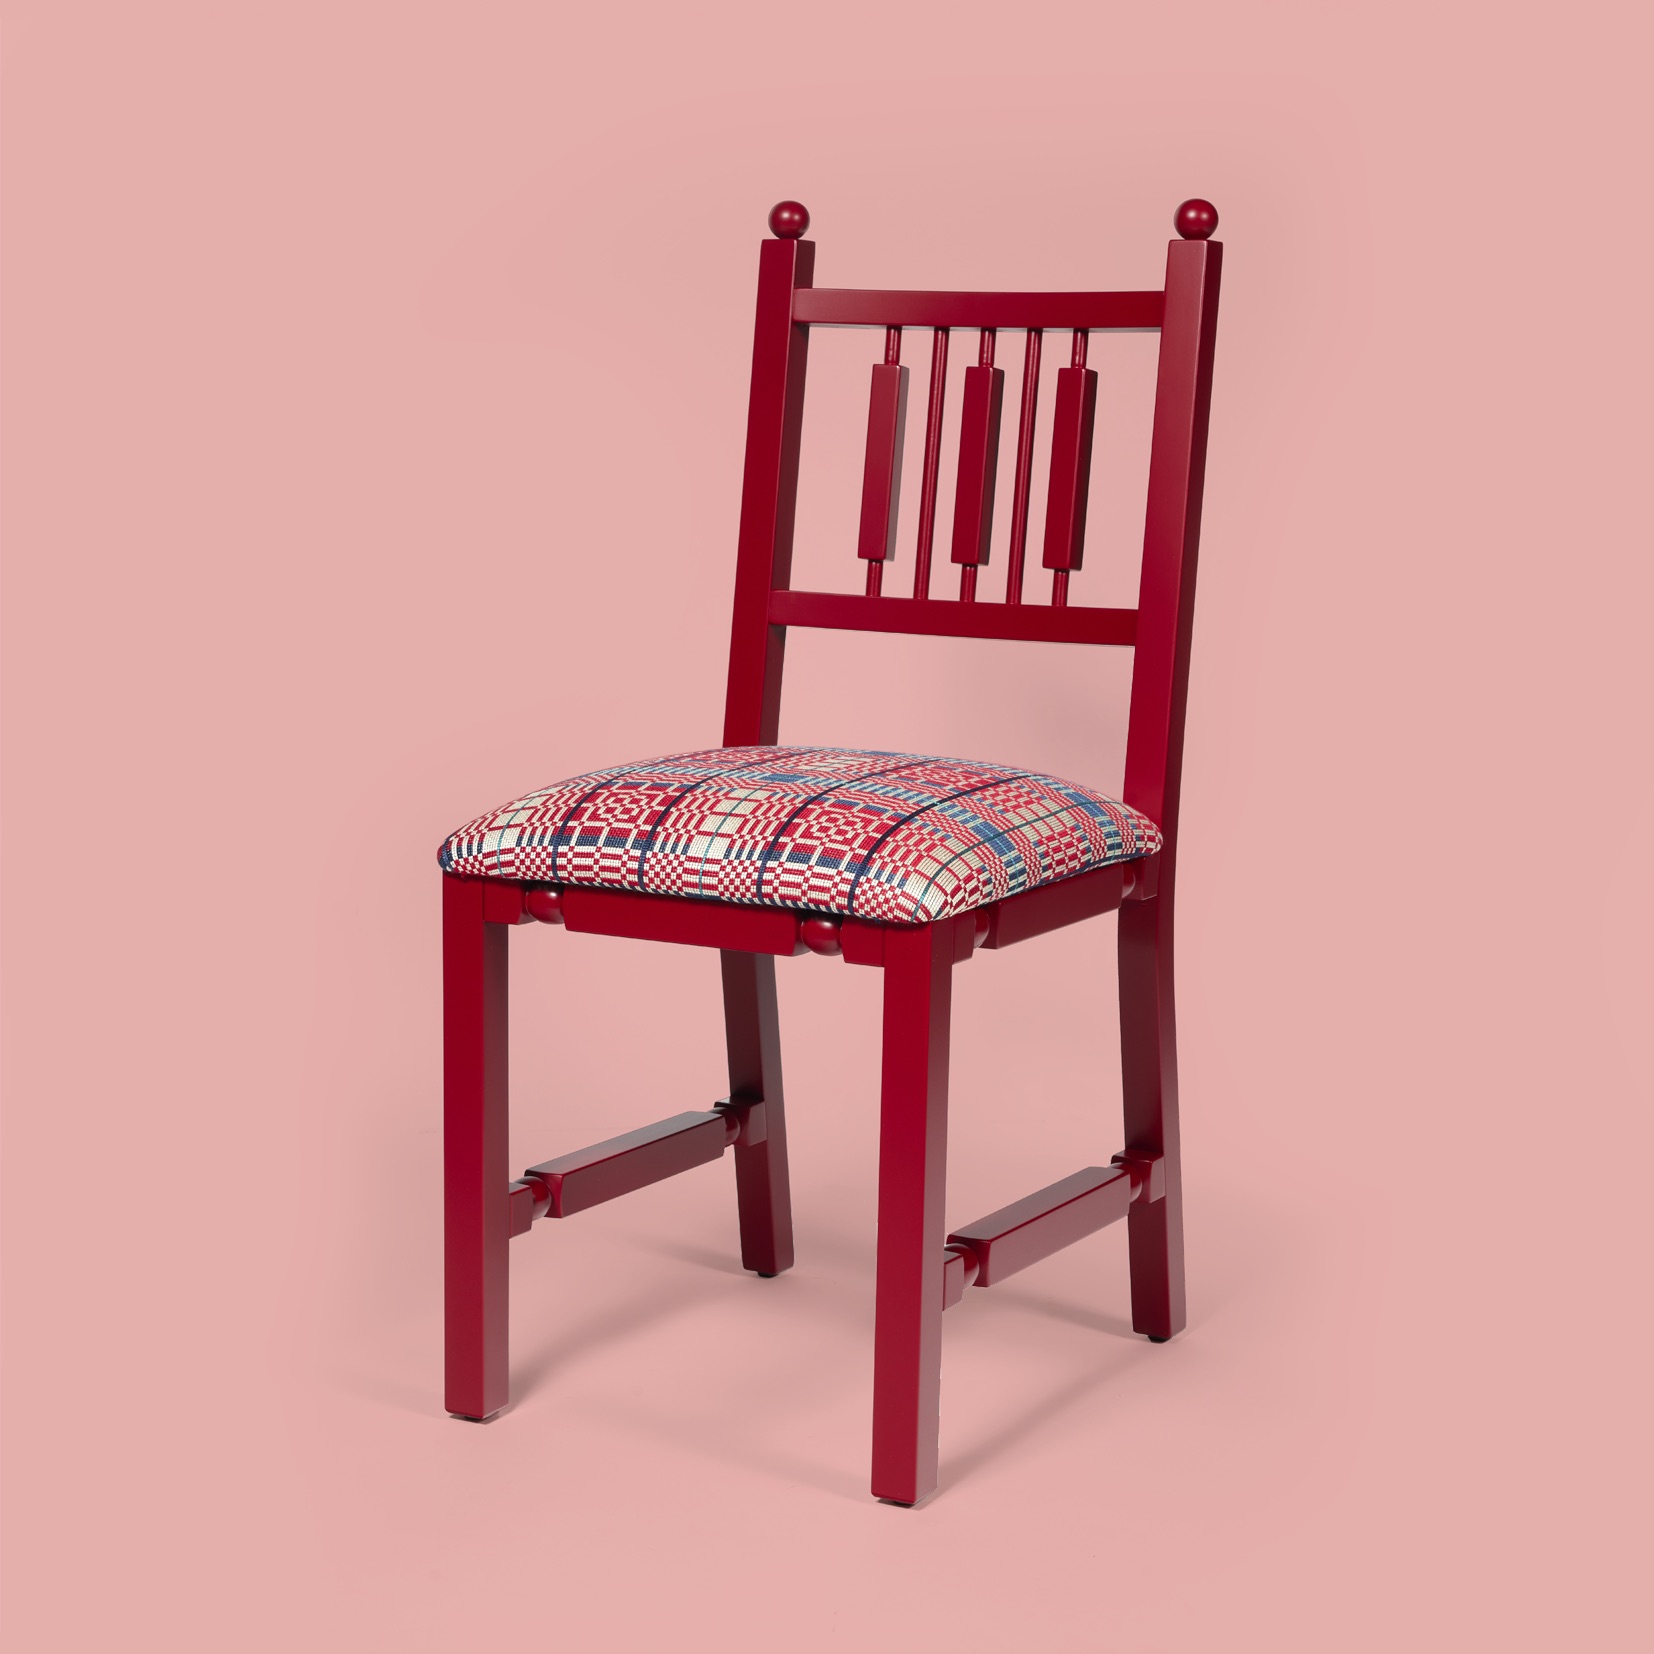 Pondichery chair Red